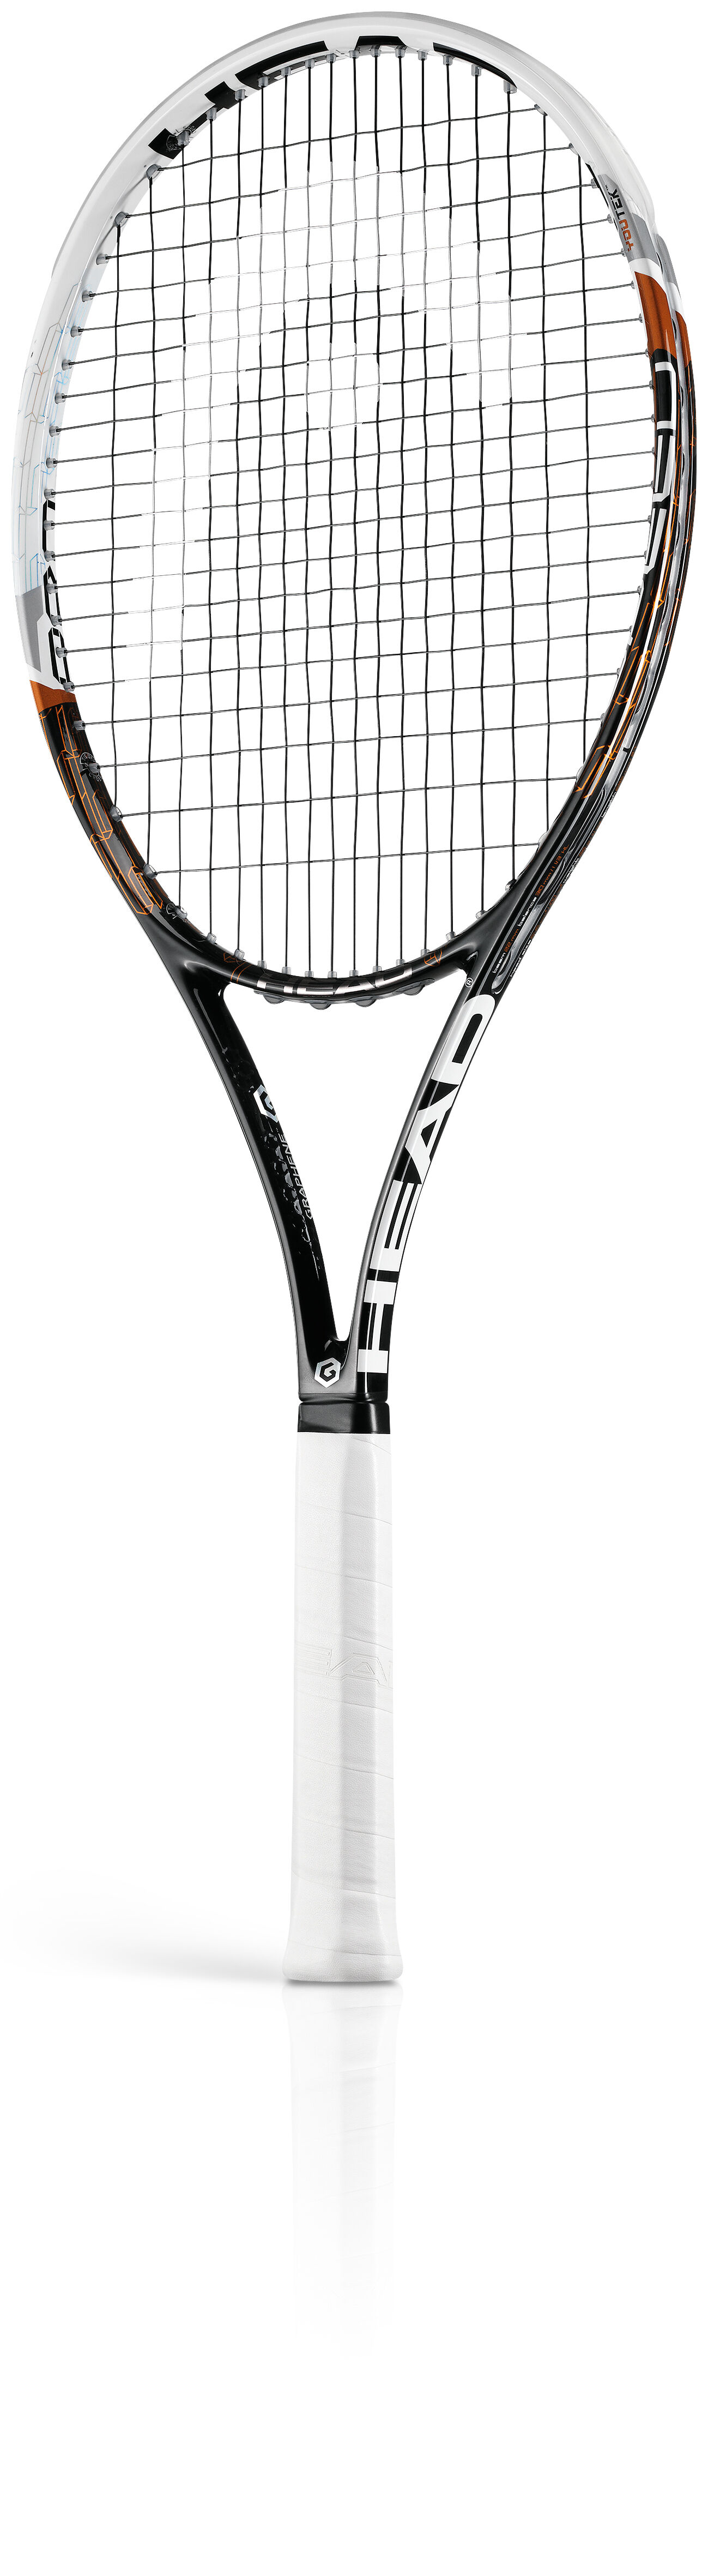 NEW Head YouTek Graphene Speed Pro 18x20 11.1 100 head 4 3/8 grip Tennis Racquet 